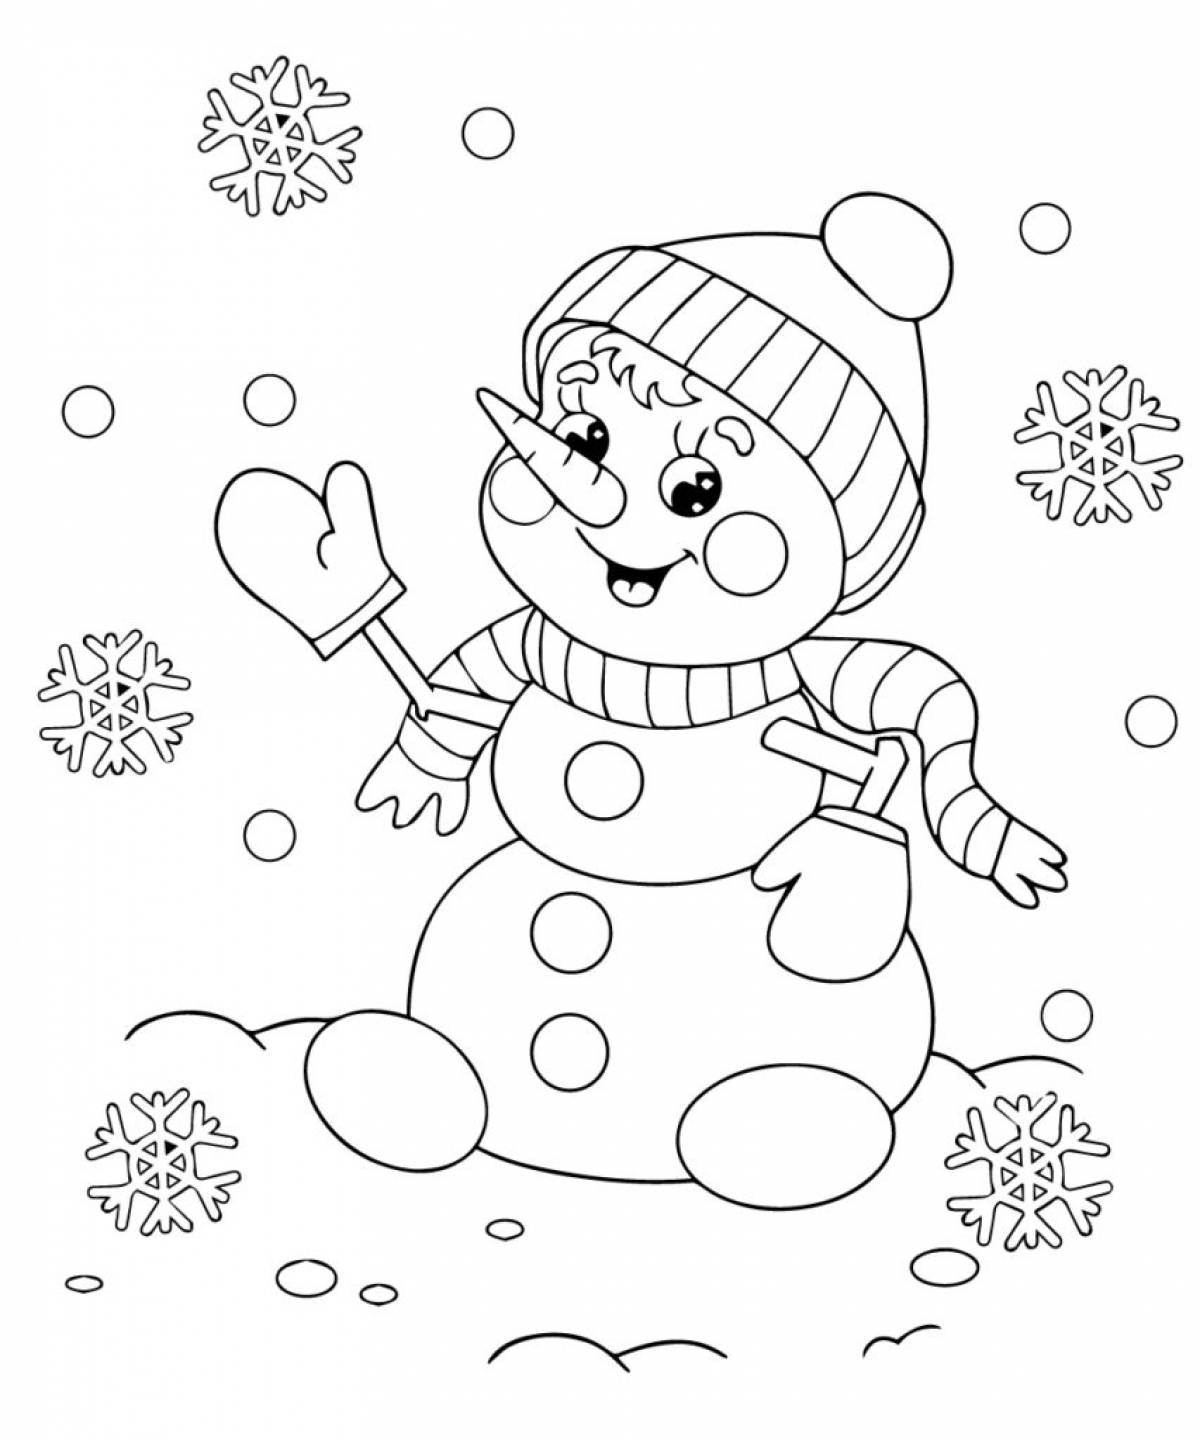 Fun snowman for kids #3